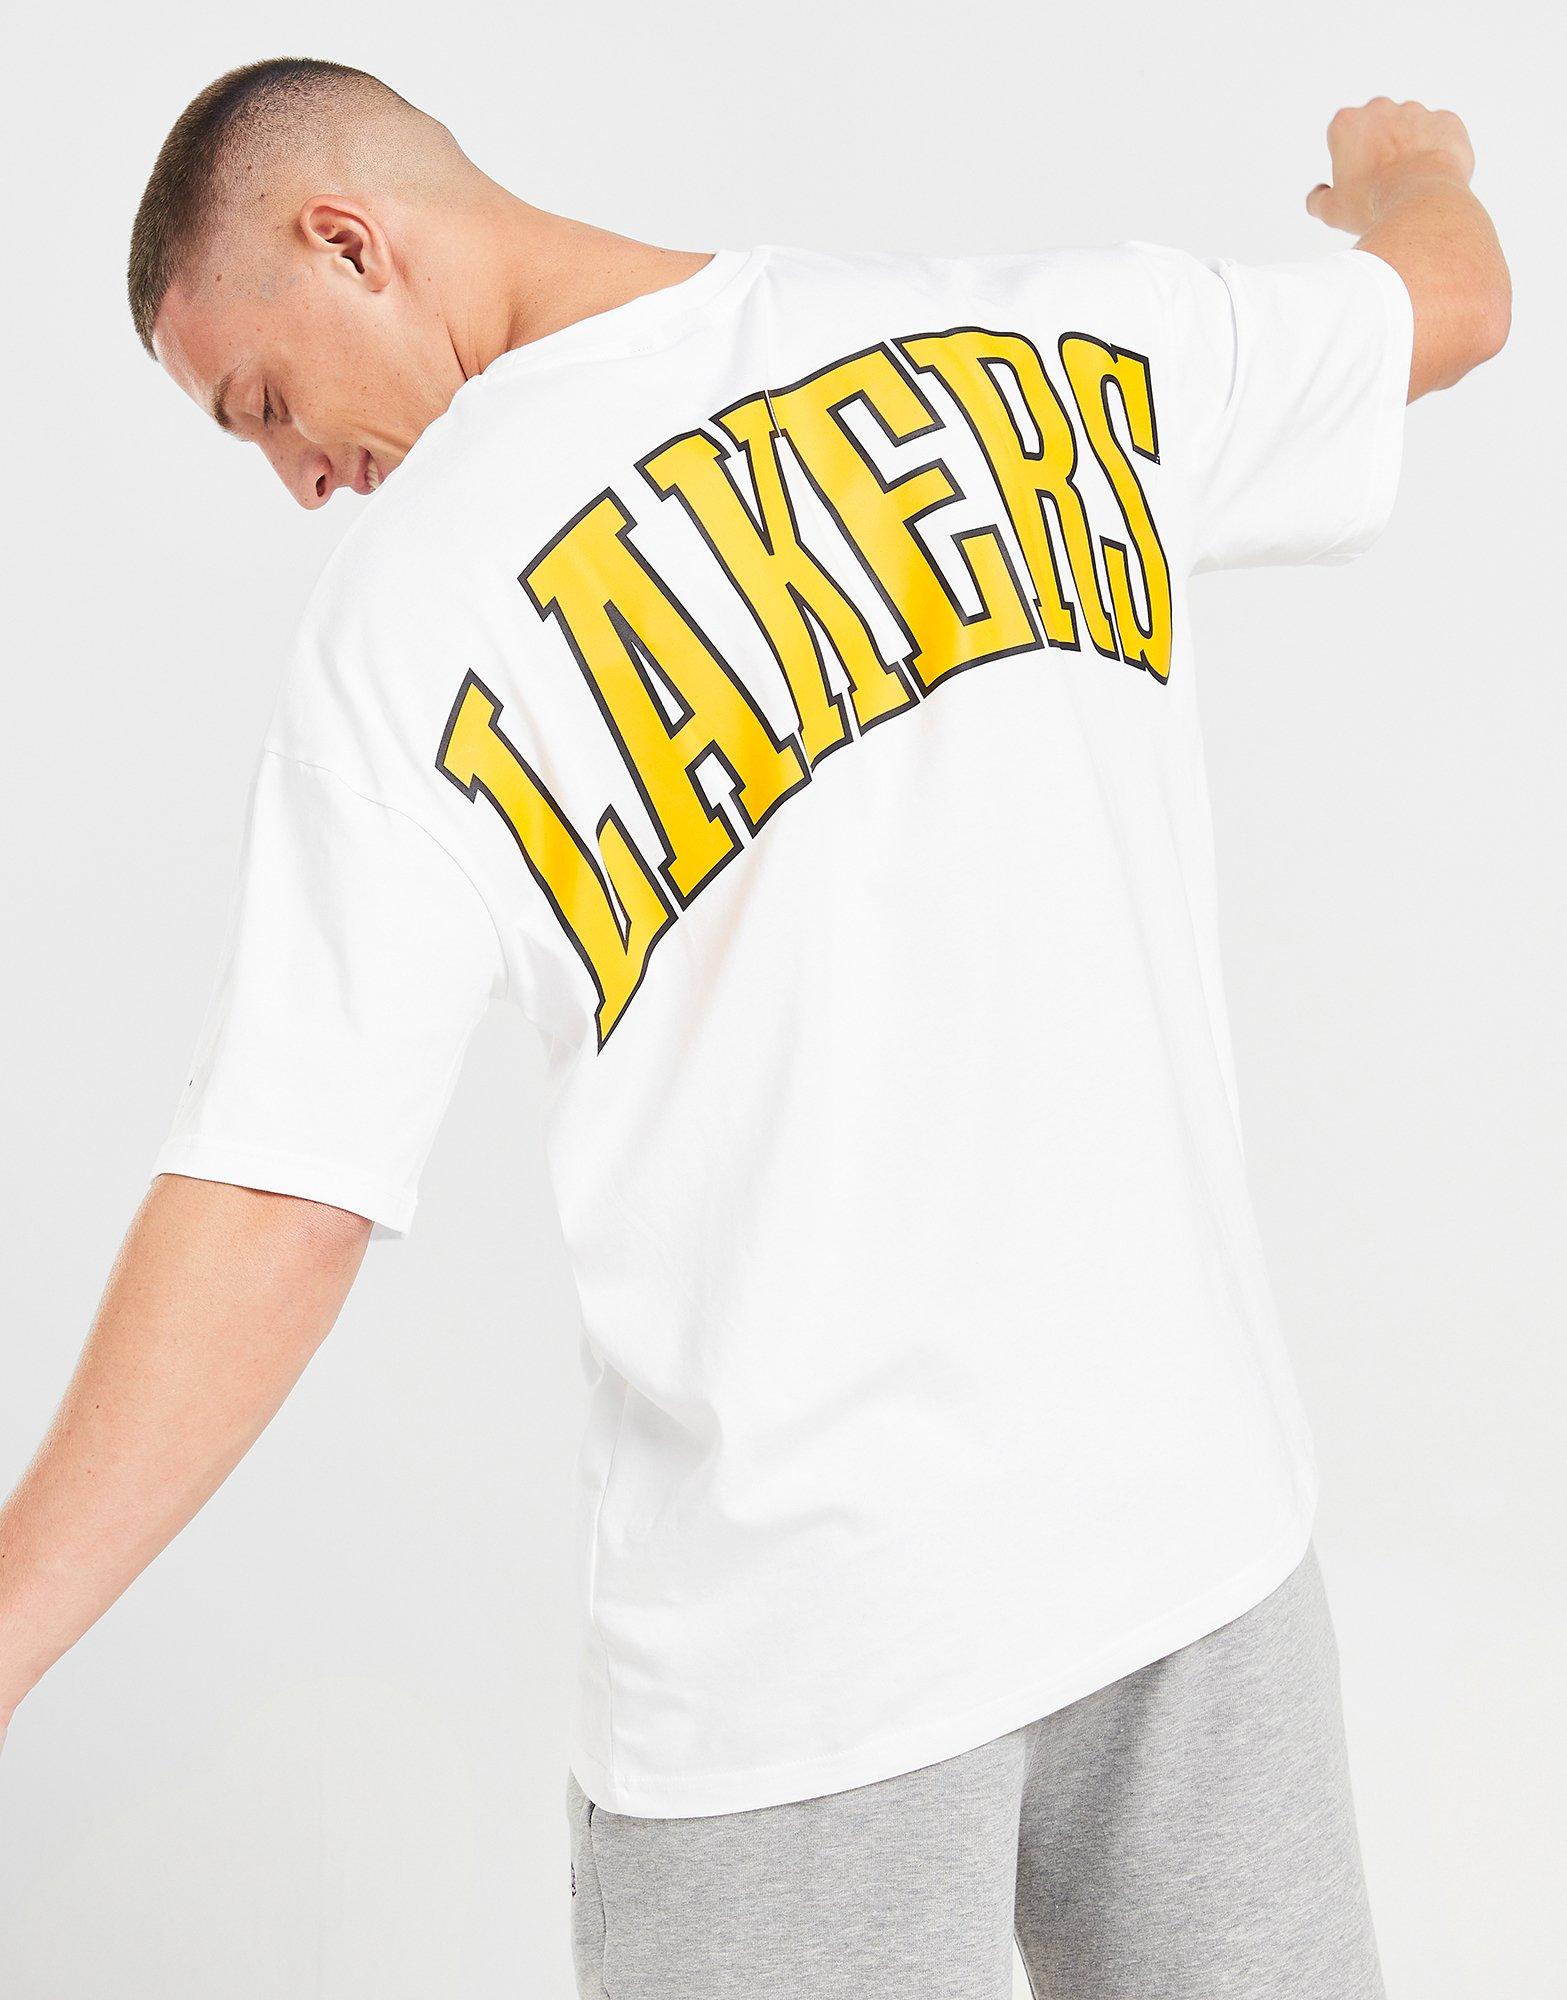 Los Angeles Lakers Laker Girls Cheerleader Tank Dress - Tank Dress Outfits  